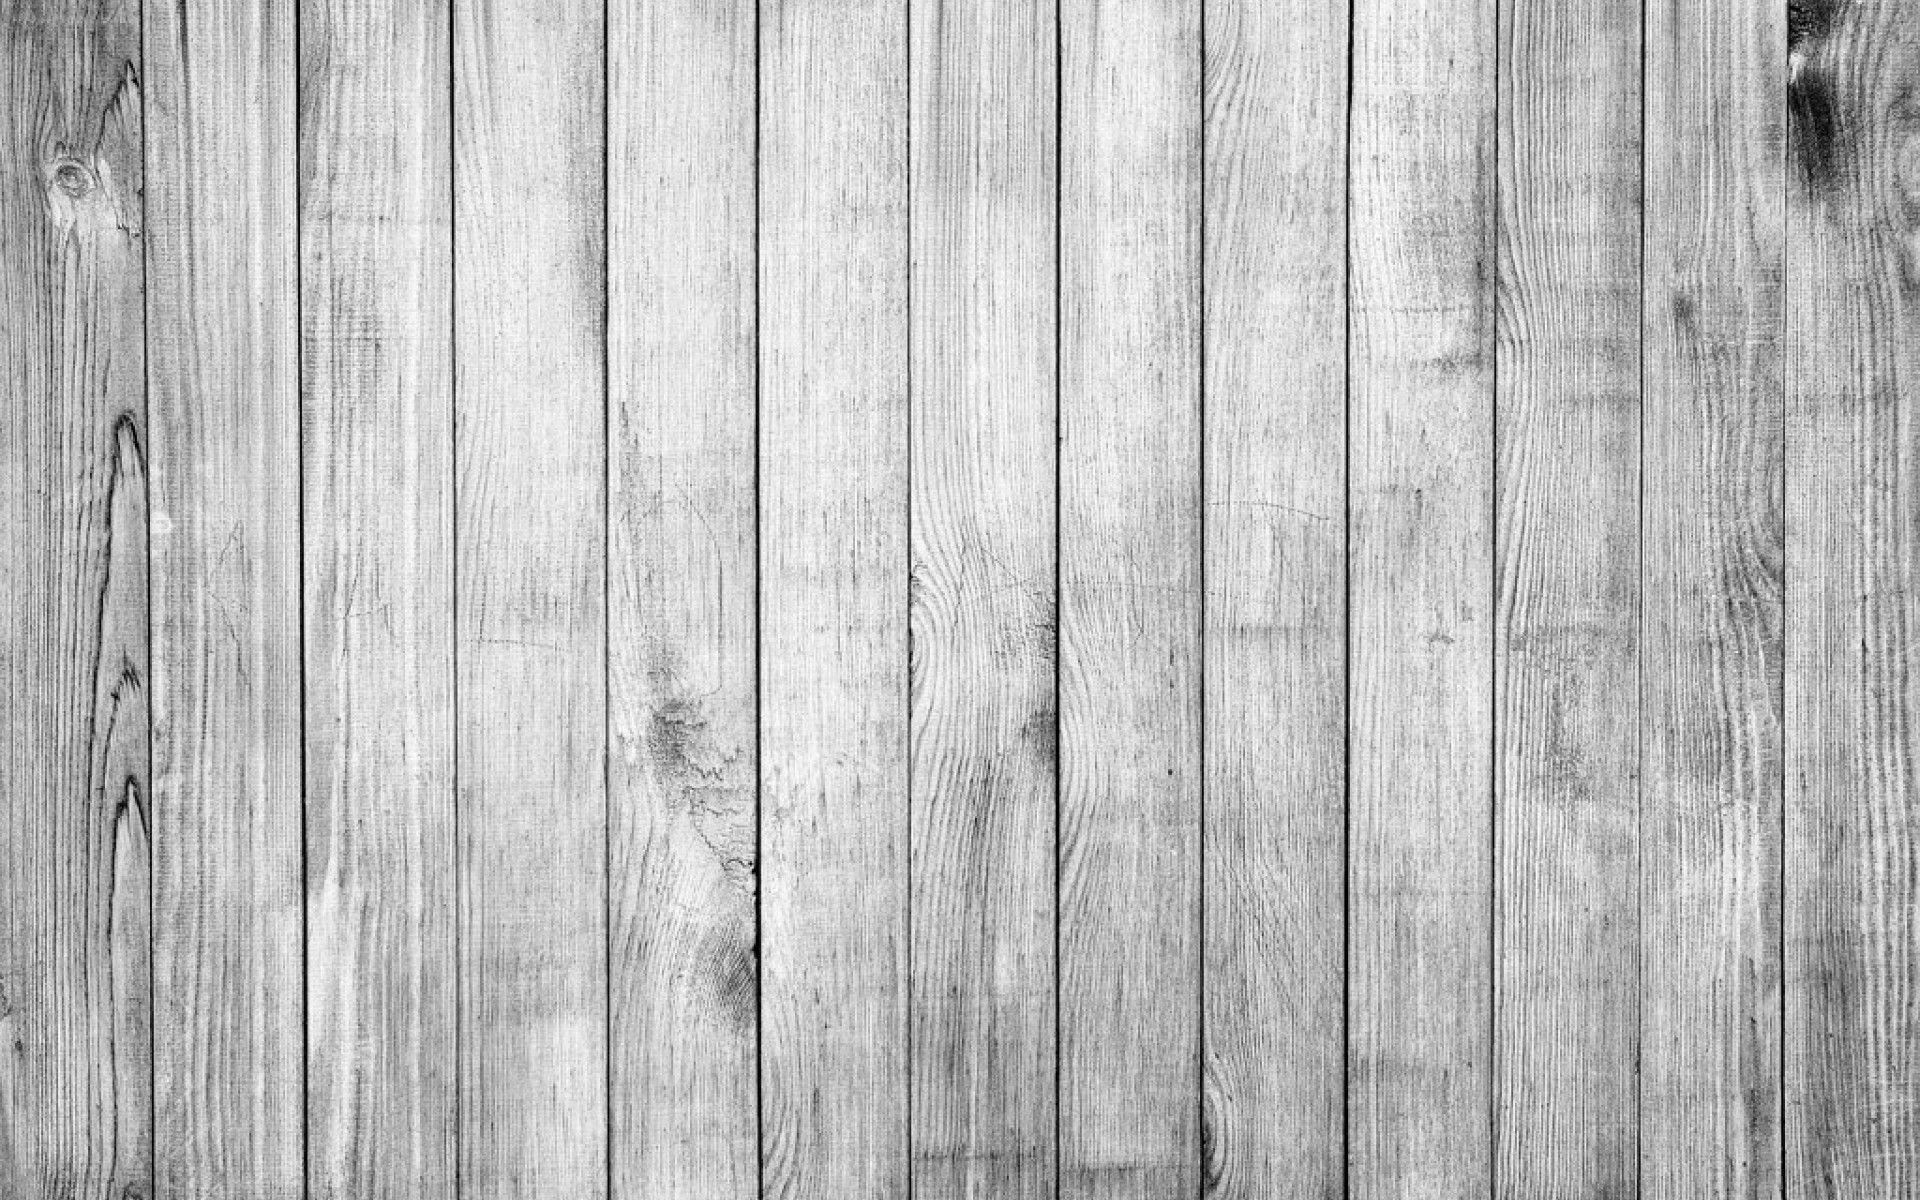 Simply: Trees background wood texture desktop